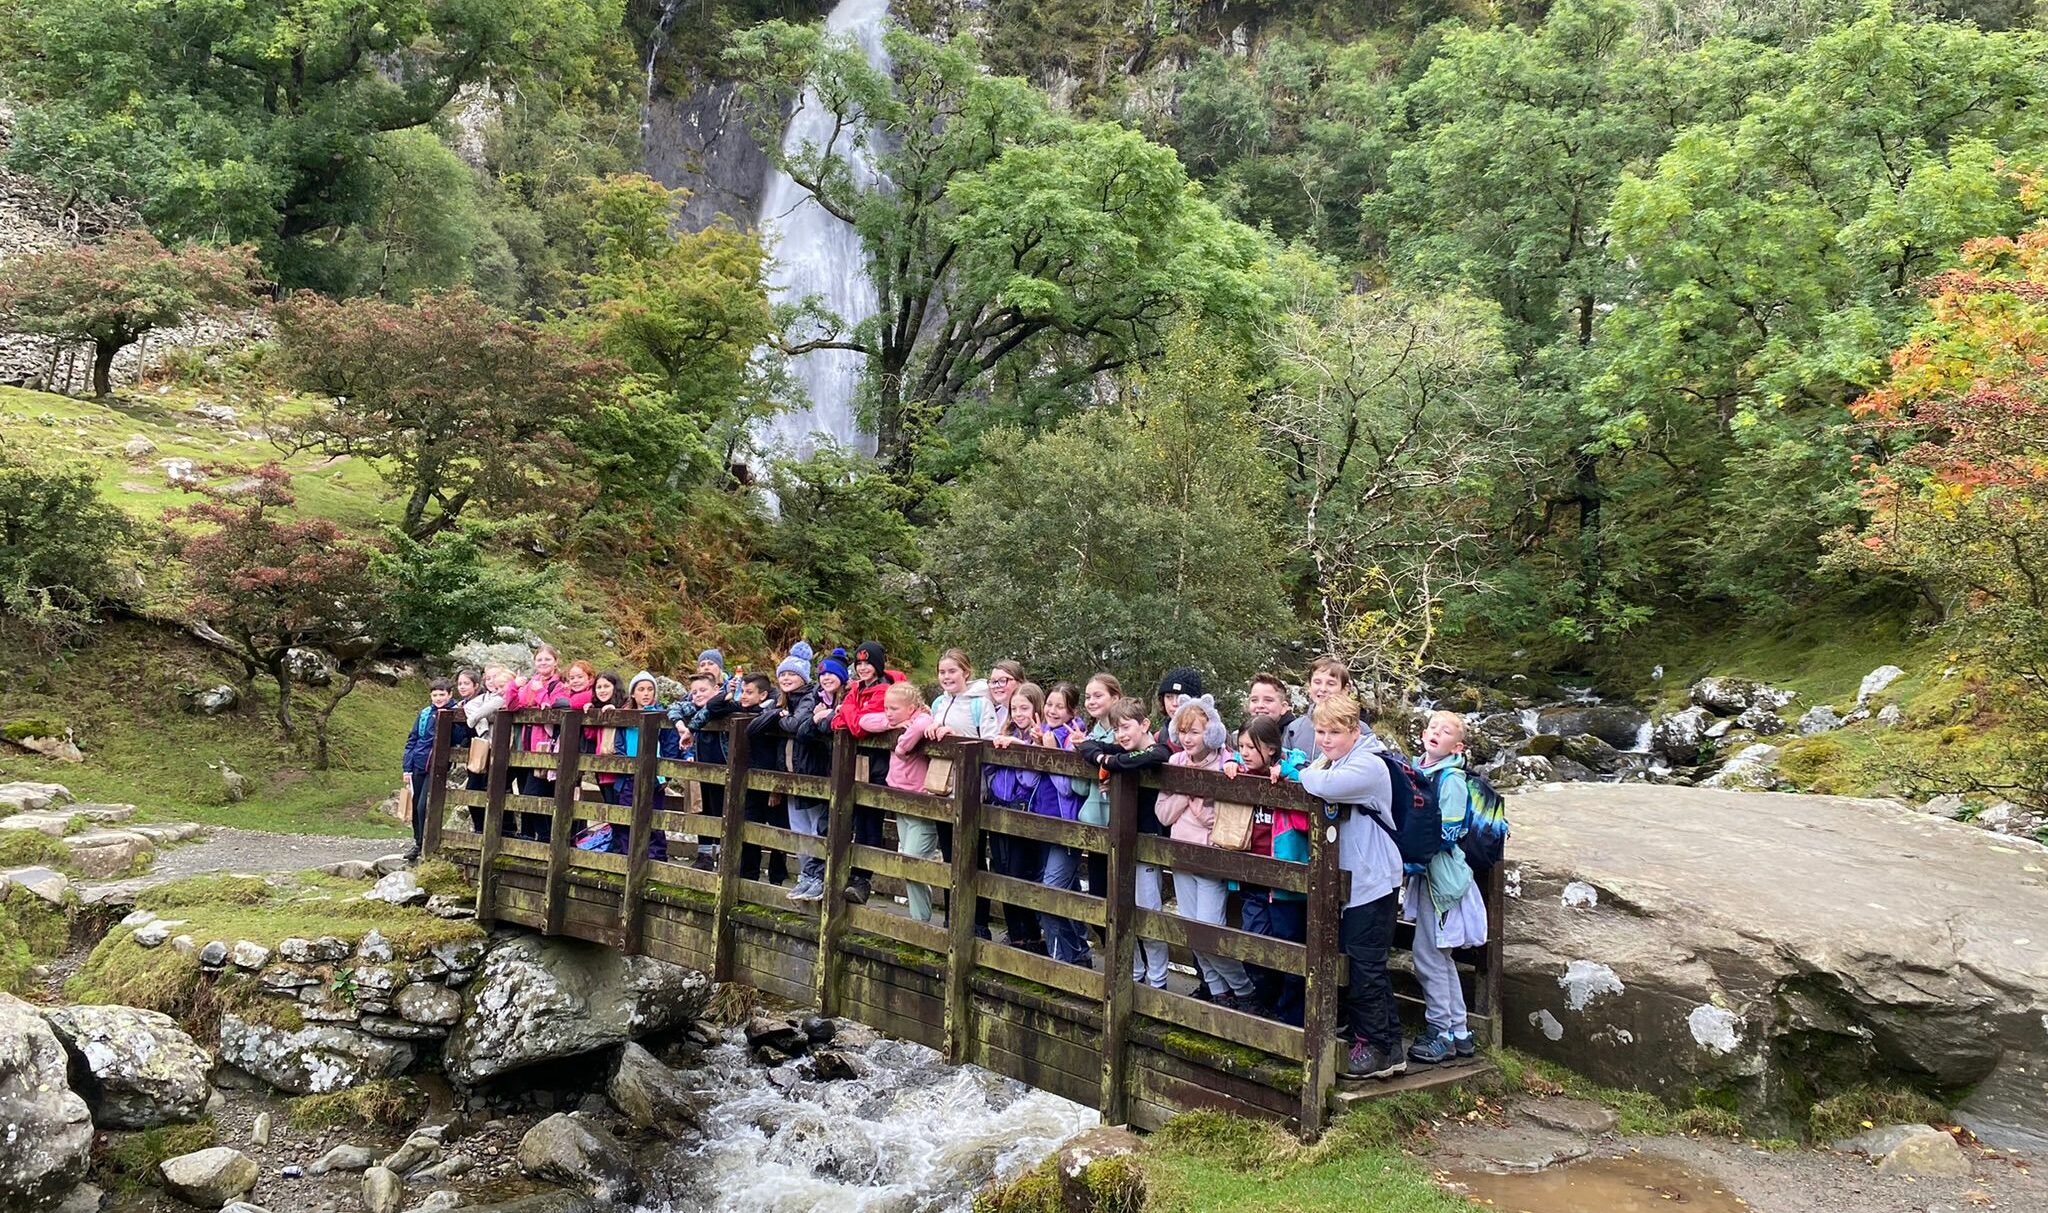 Children from Ysgol Dyffryn Enfys on a seed collecting trip to Aber Falls